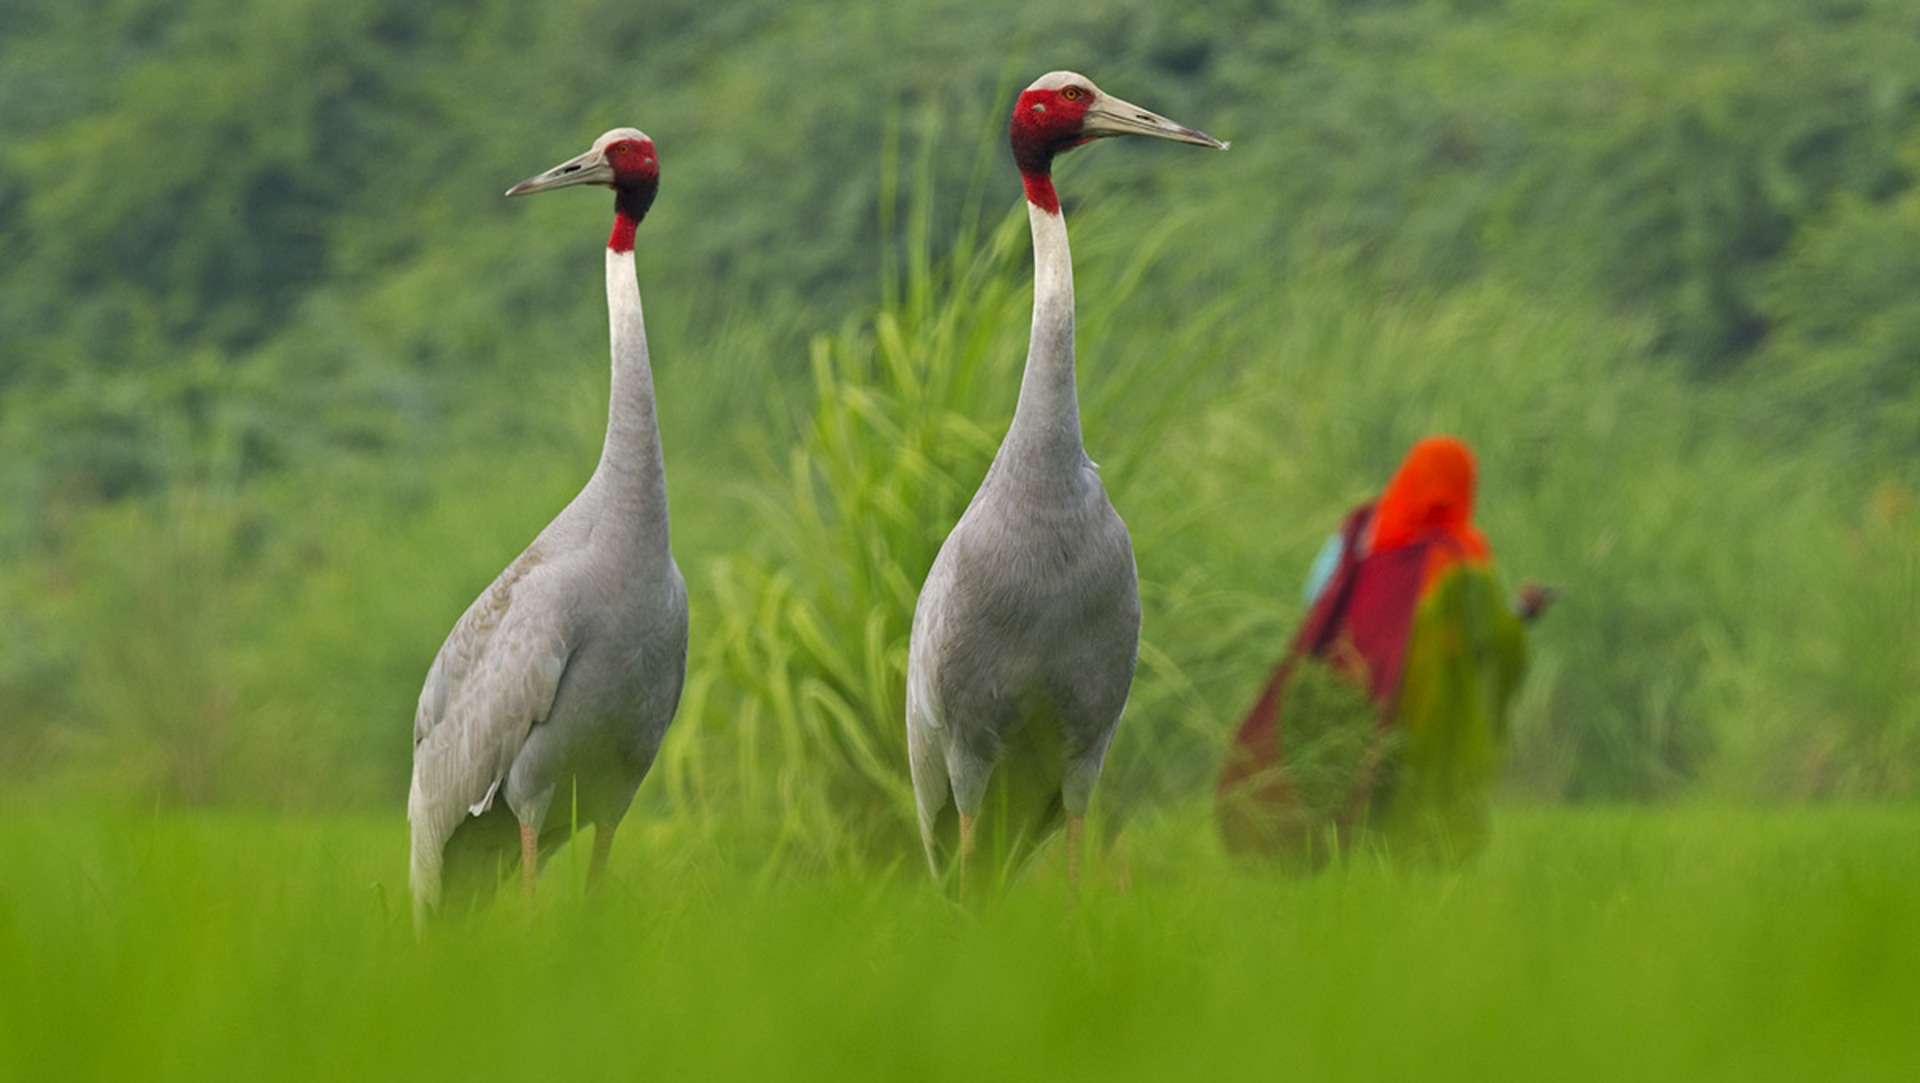 Sarus crane population on decline with shrinking wetland area